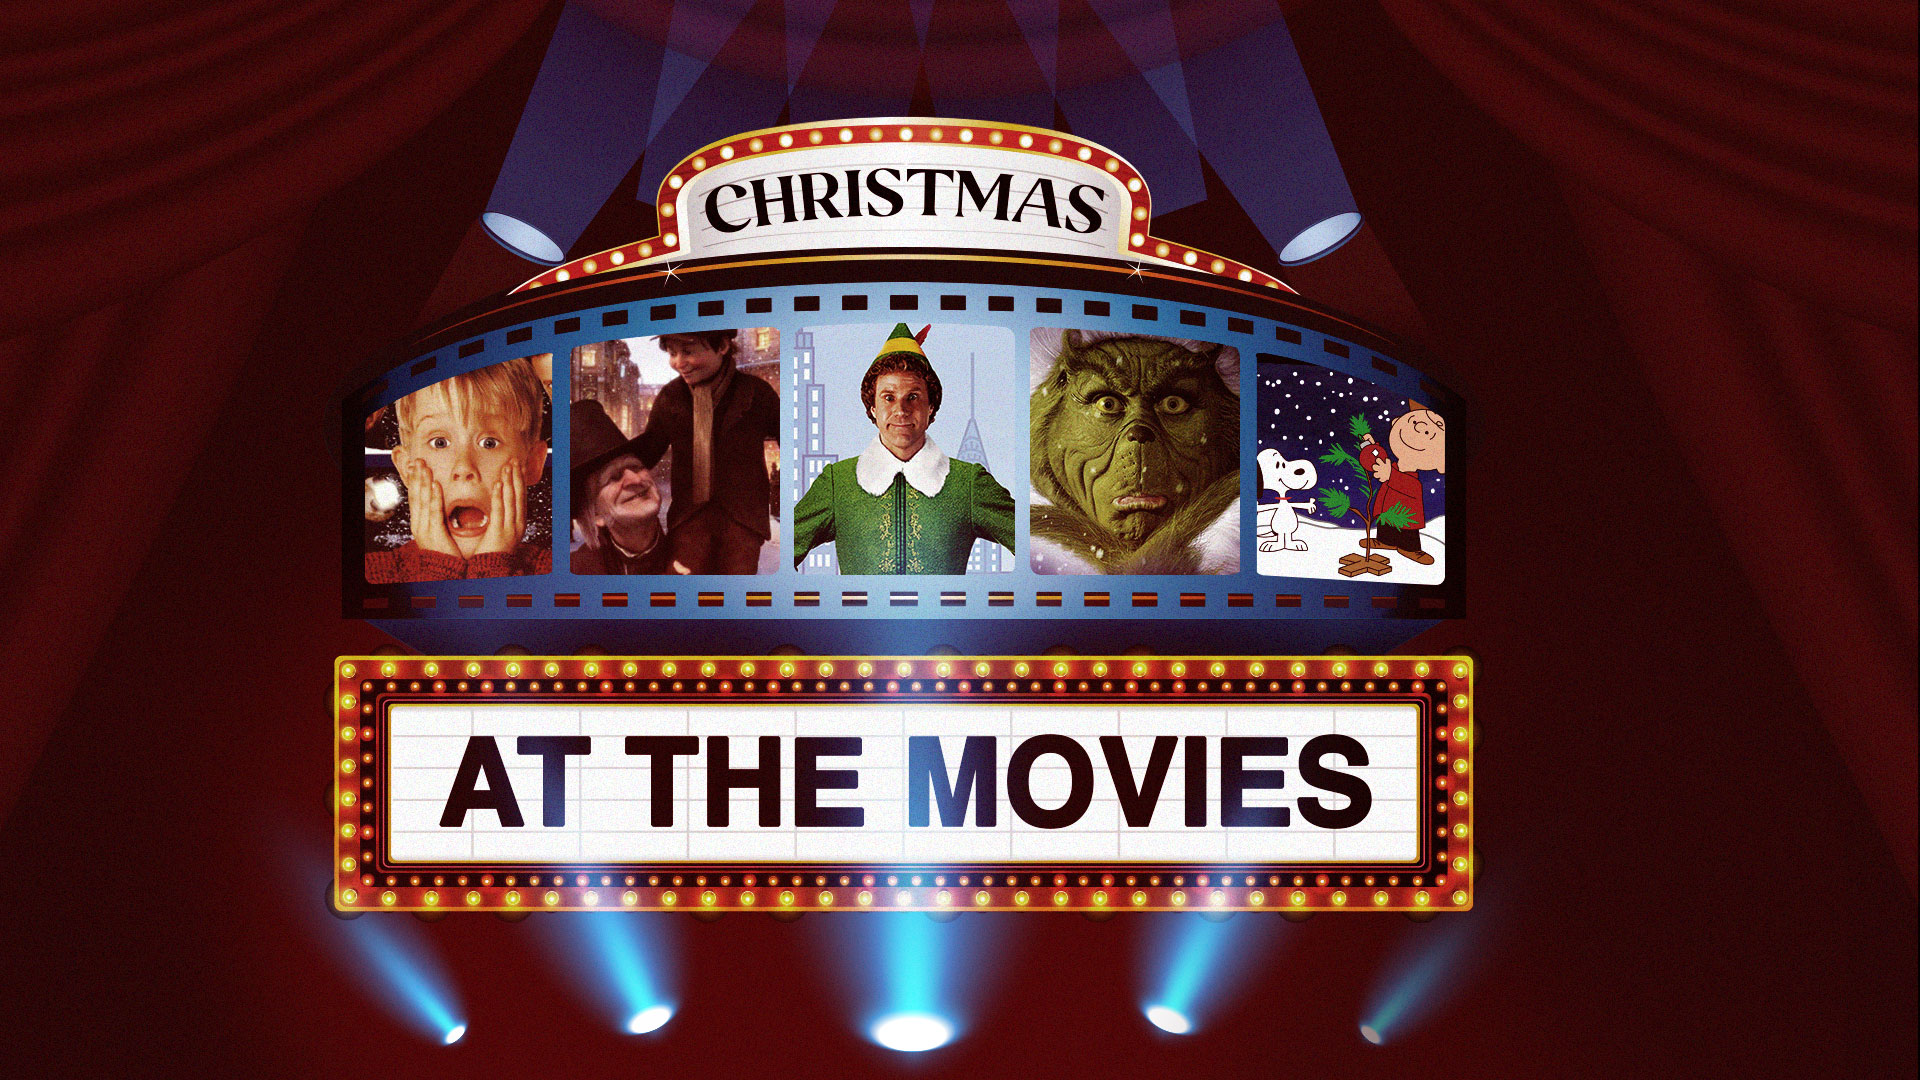    Christmas at the Movies